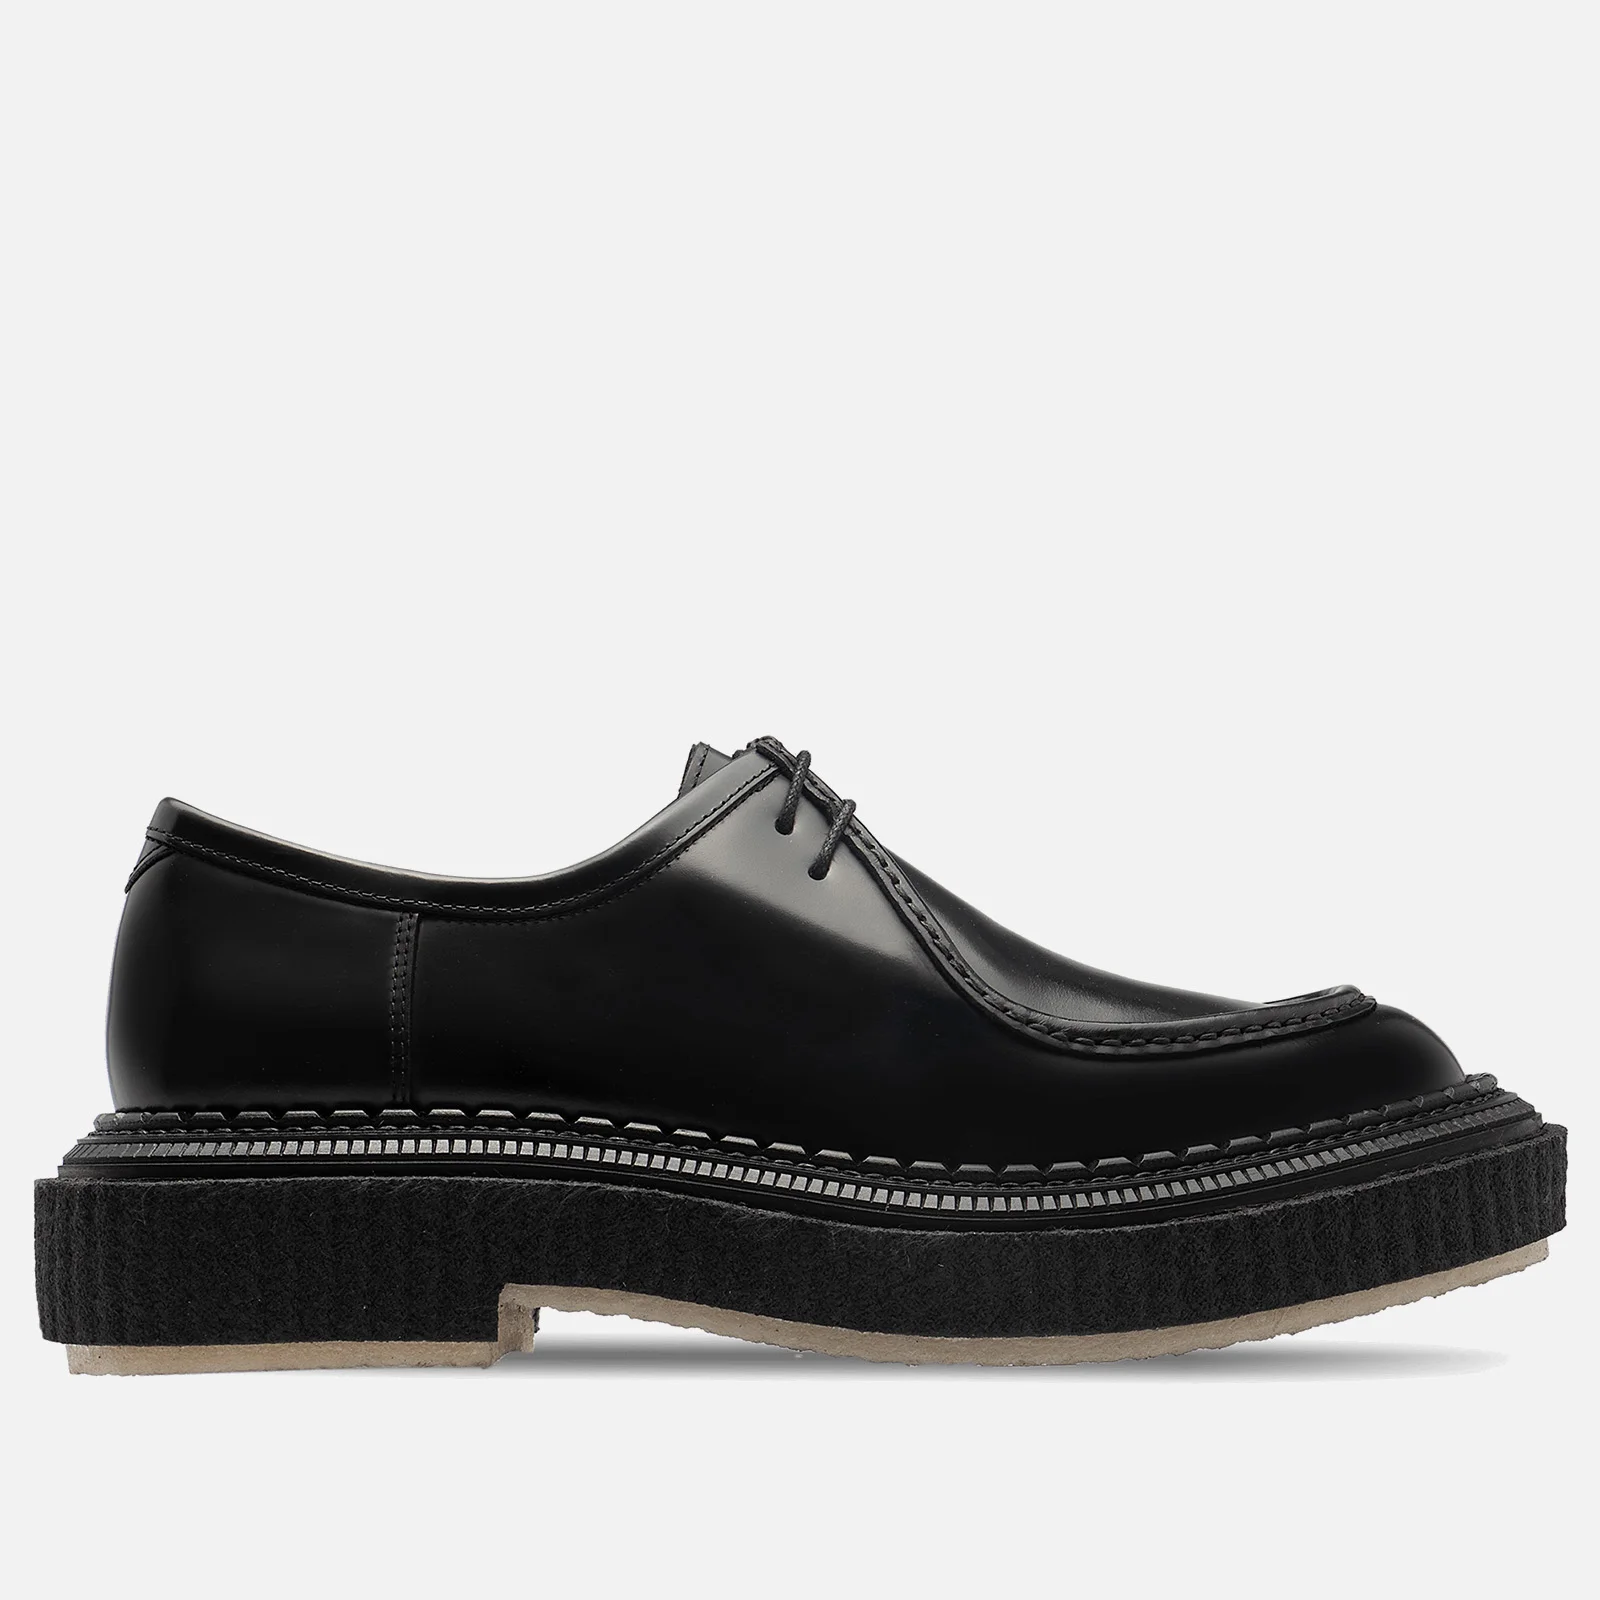 Adieu Men's Type 153 Leather Two Eye Shoes - Black Image 1